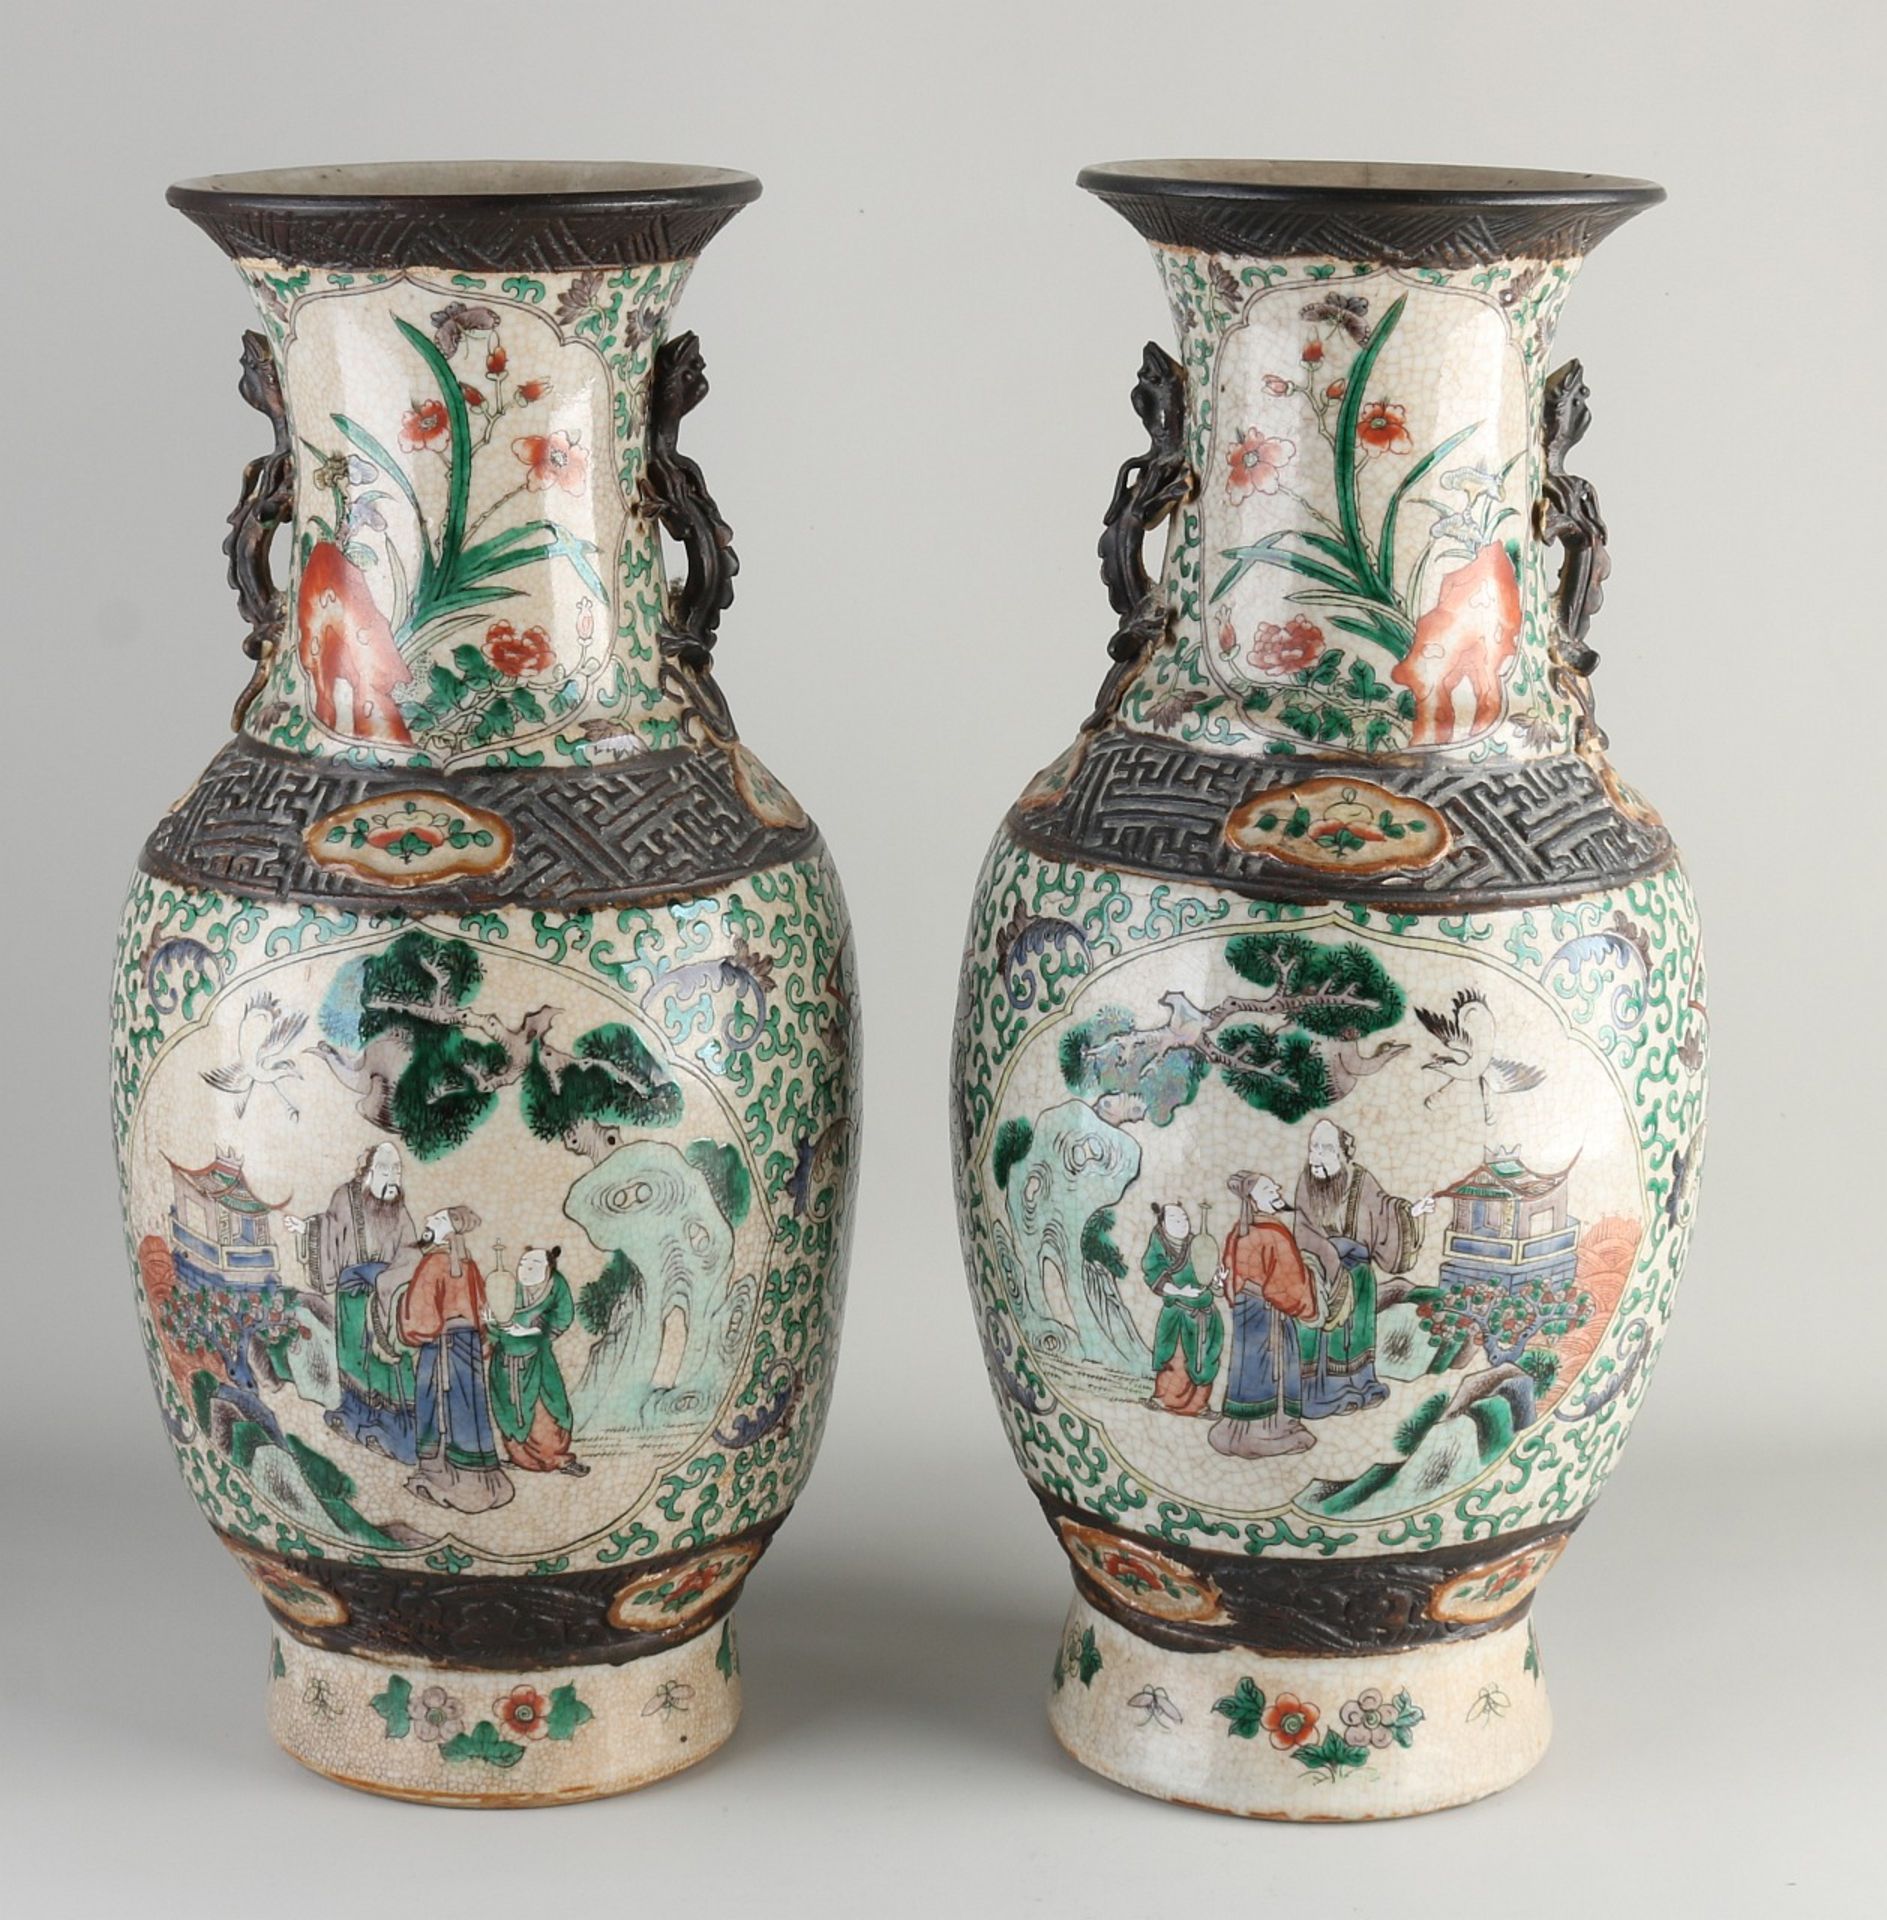 Pair of antique Chinese/Cantonese vases, H 45 cm.